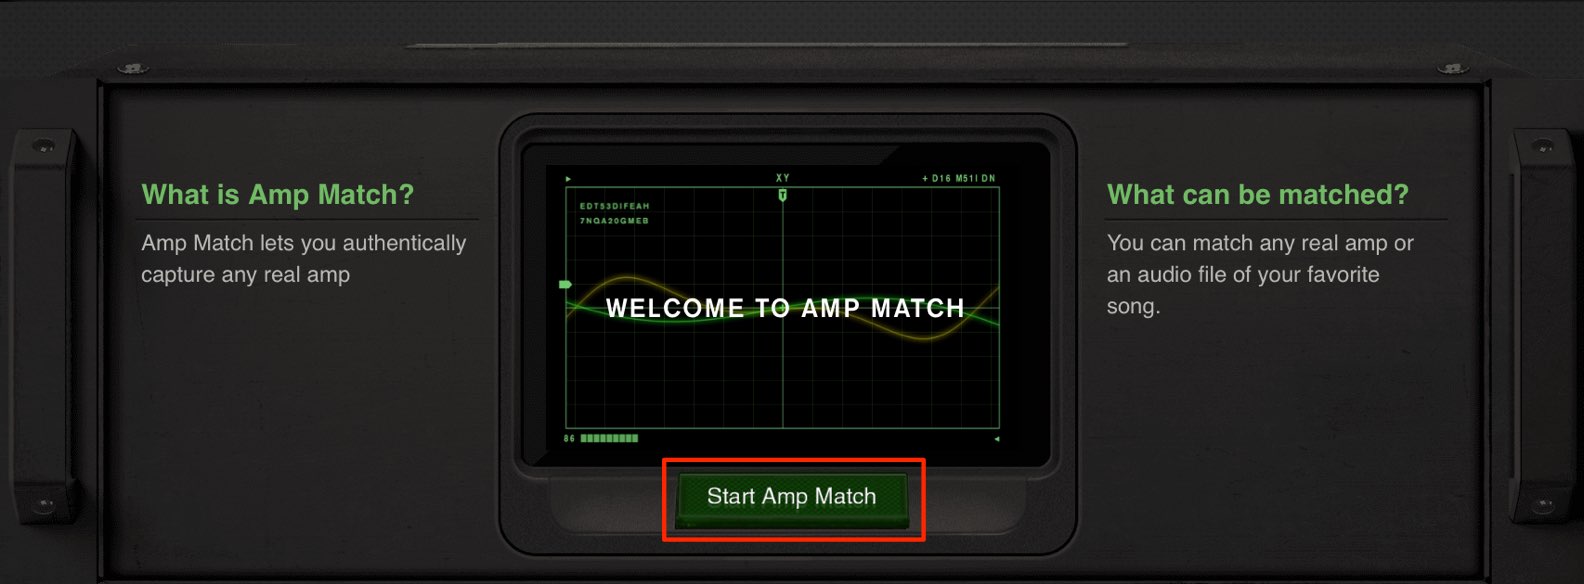 Start Amp Match